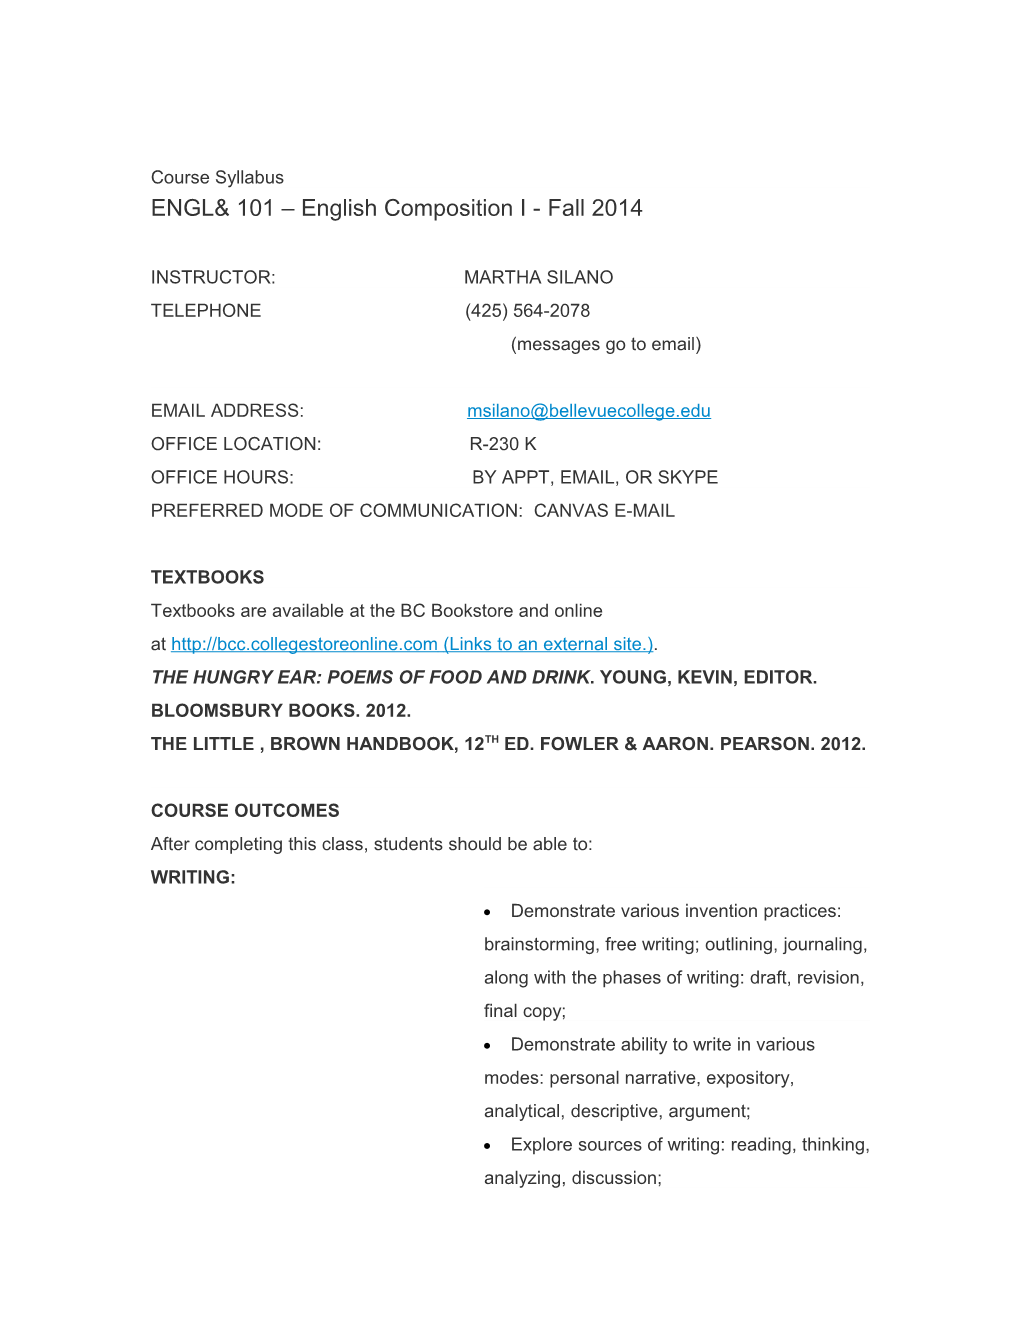 ENGL& 101 English Composition I -Fall 2014